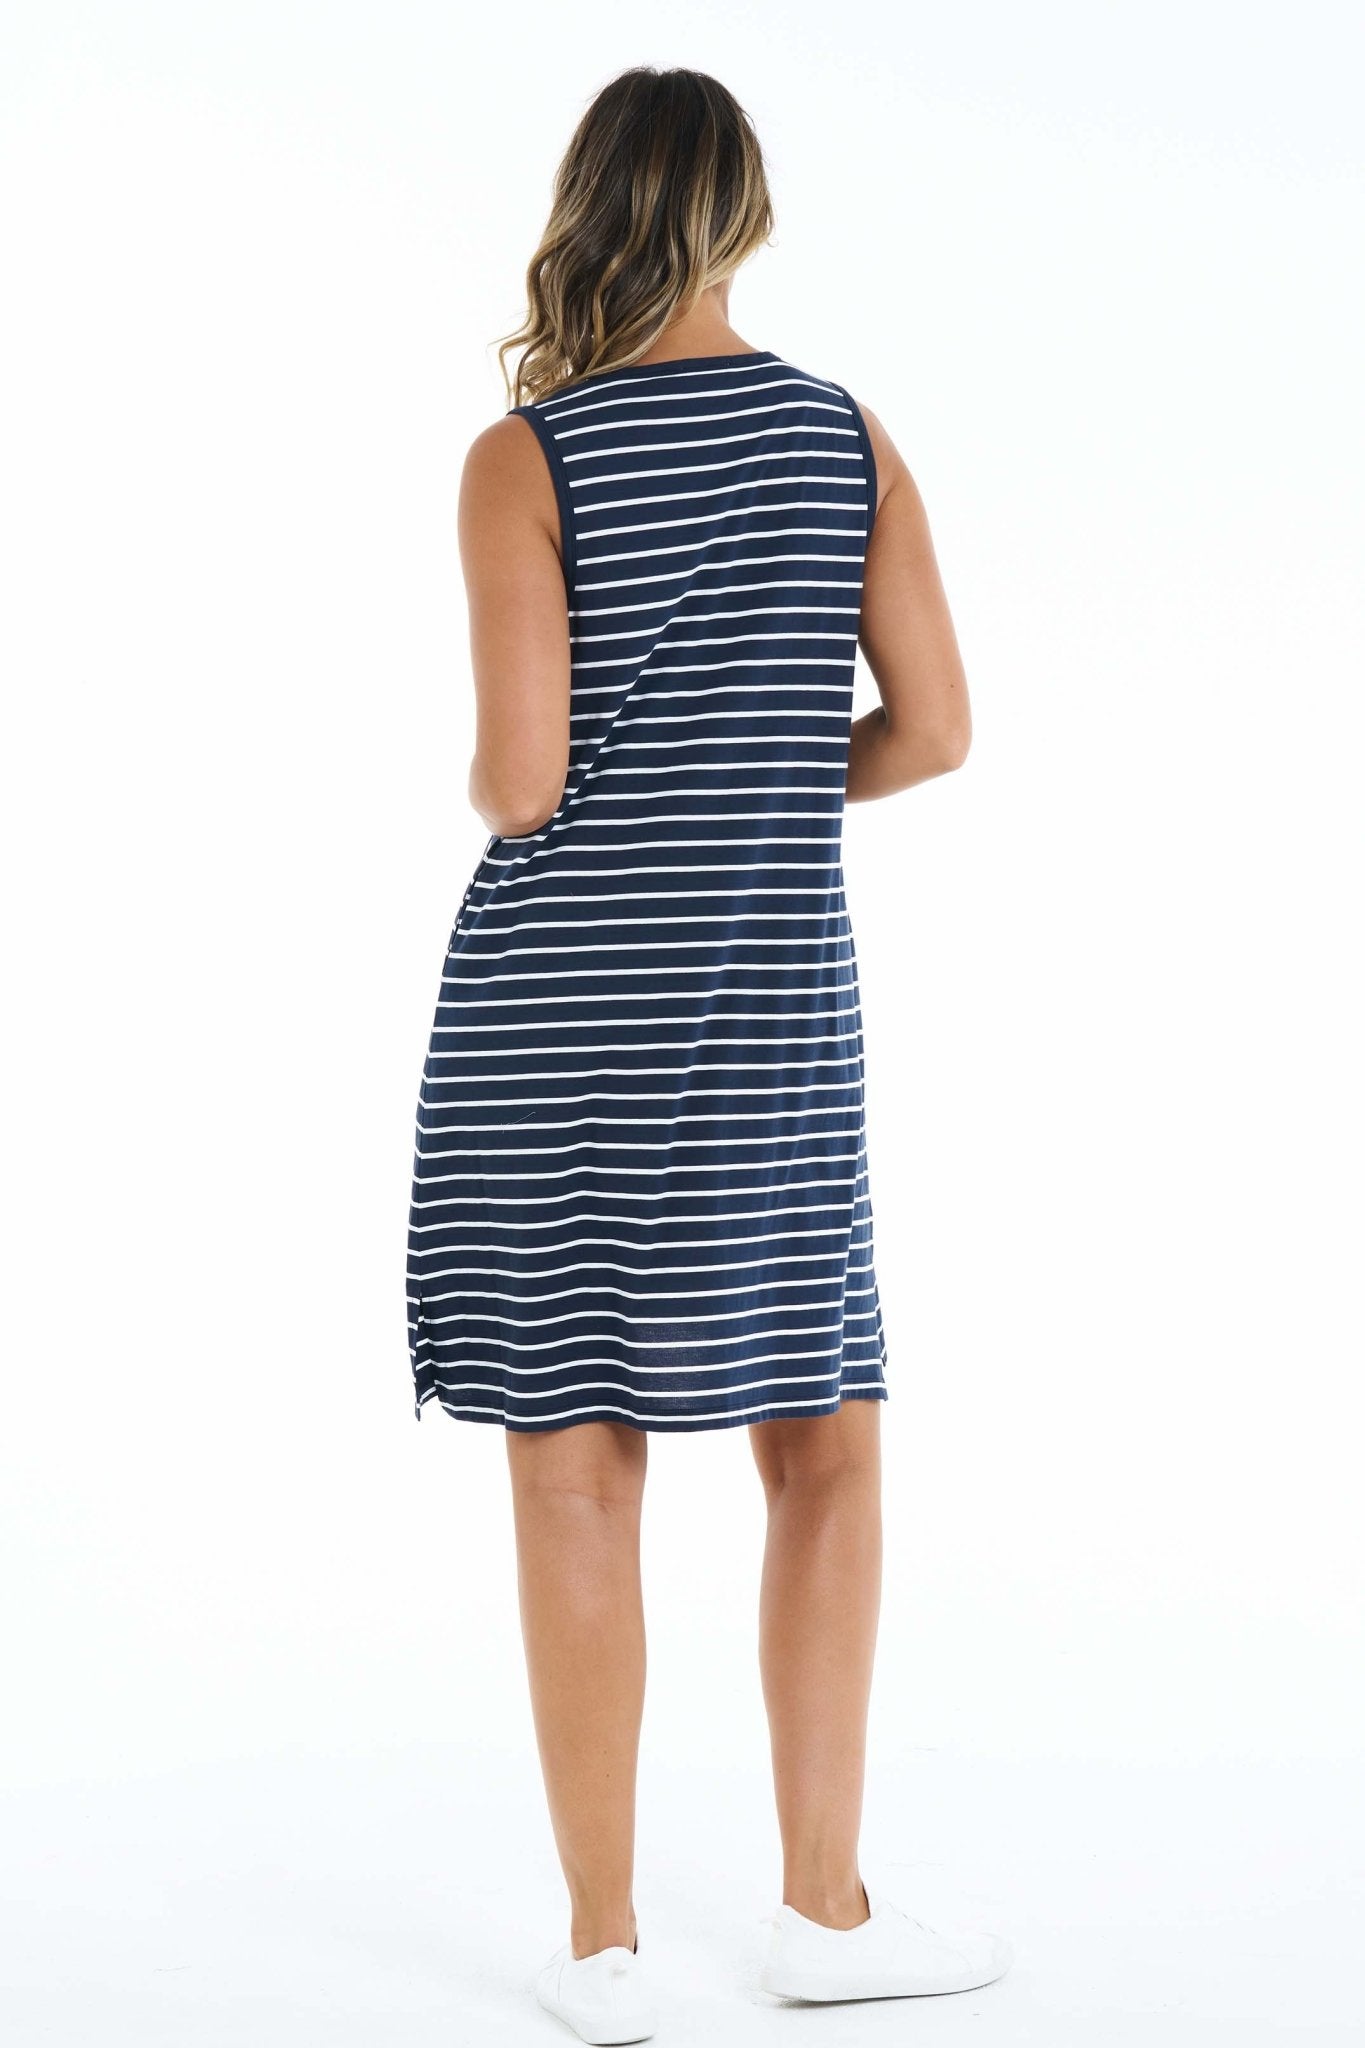 Betty Basics Summer Dress in Nautical Stripe - Hey Sara